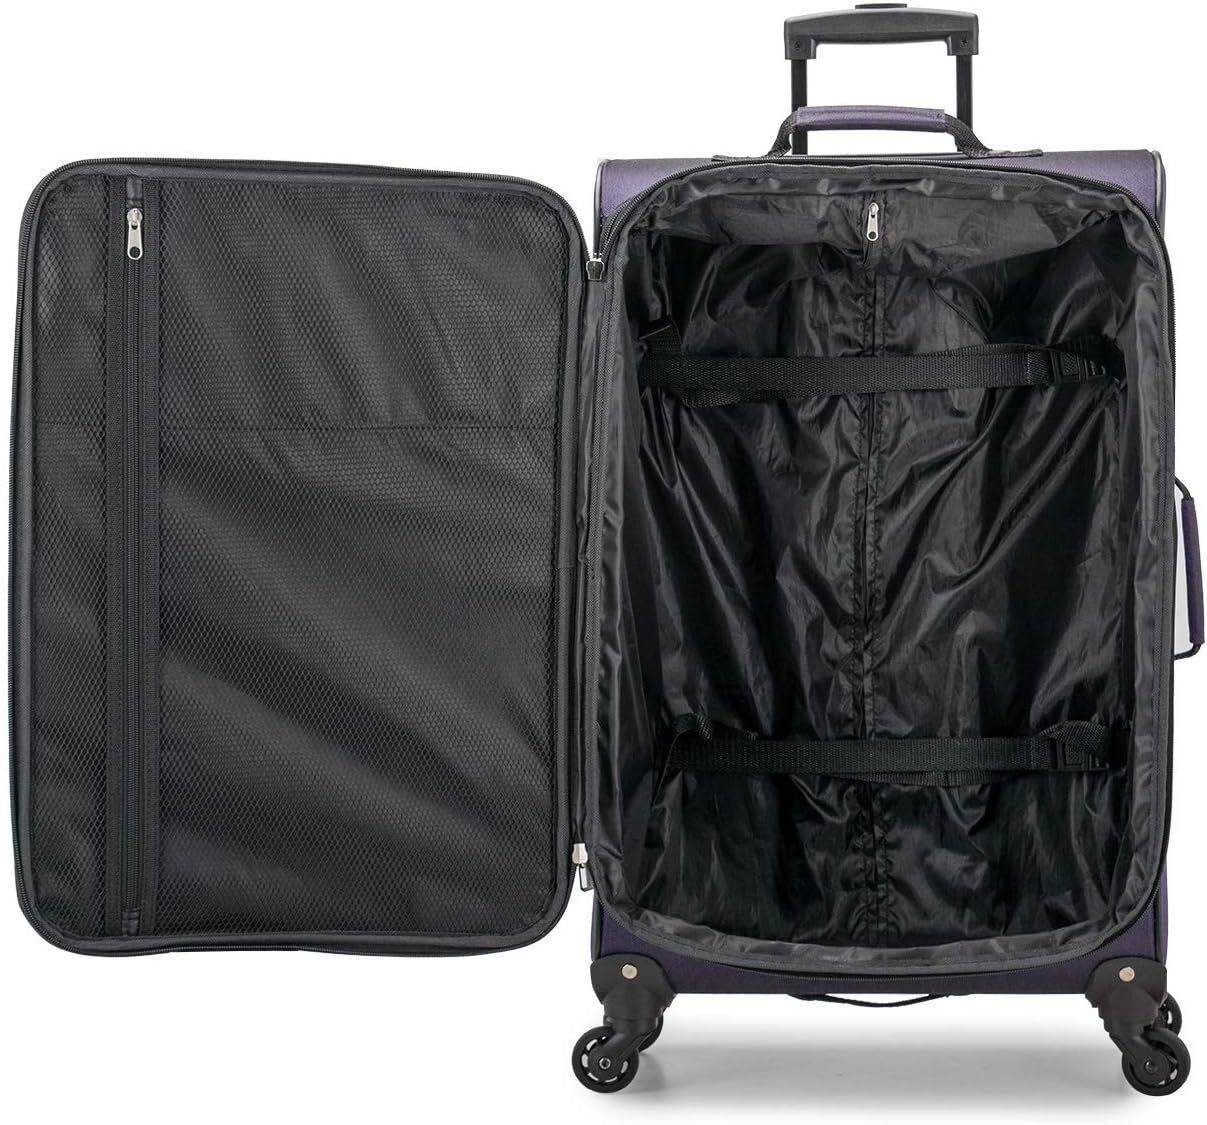 U.S. Traveler Aviron Bay Expandable Softside Spinner 2 Piece Luggage, Purple